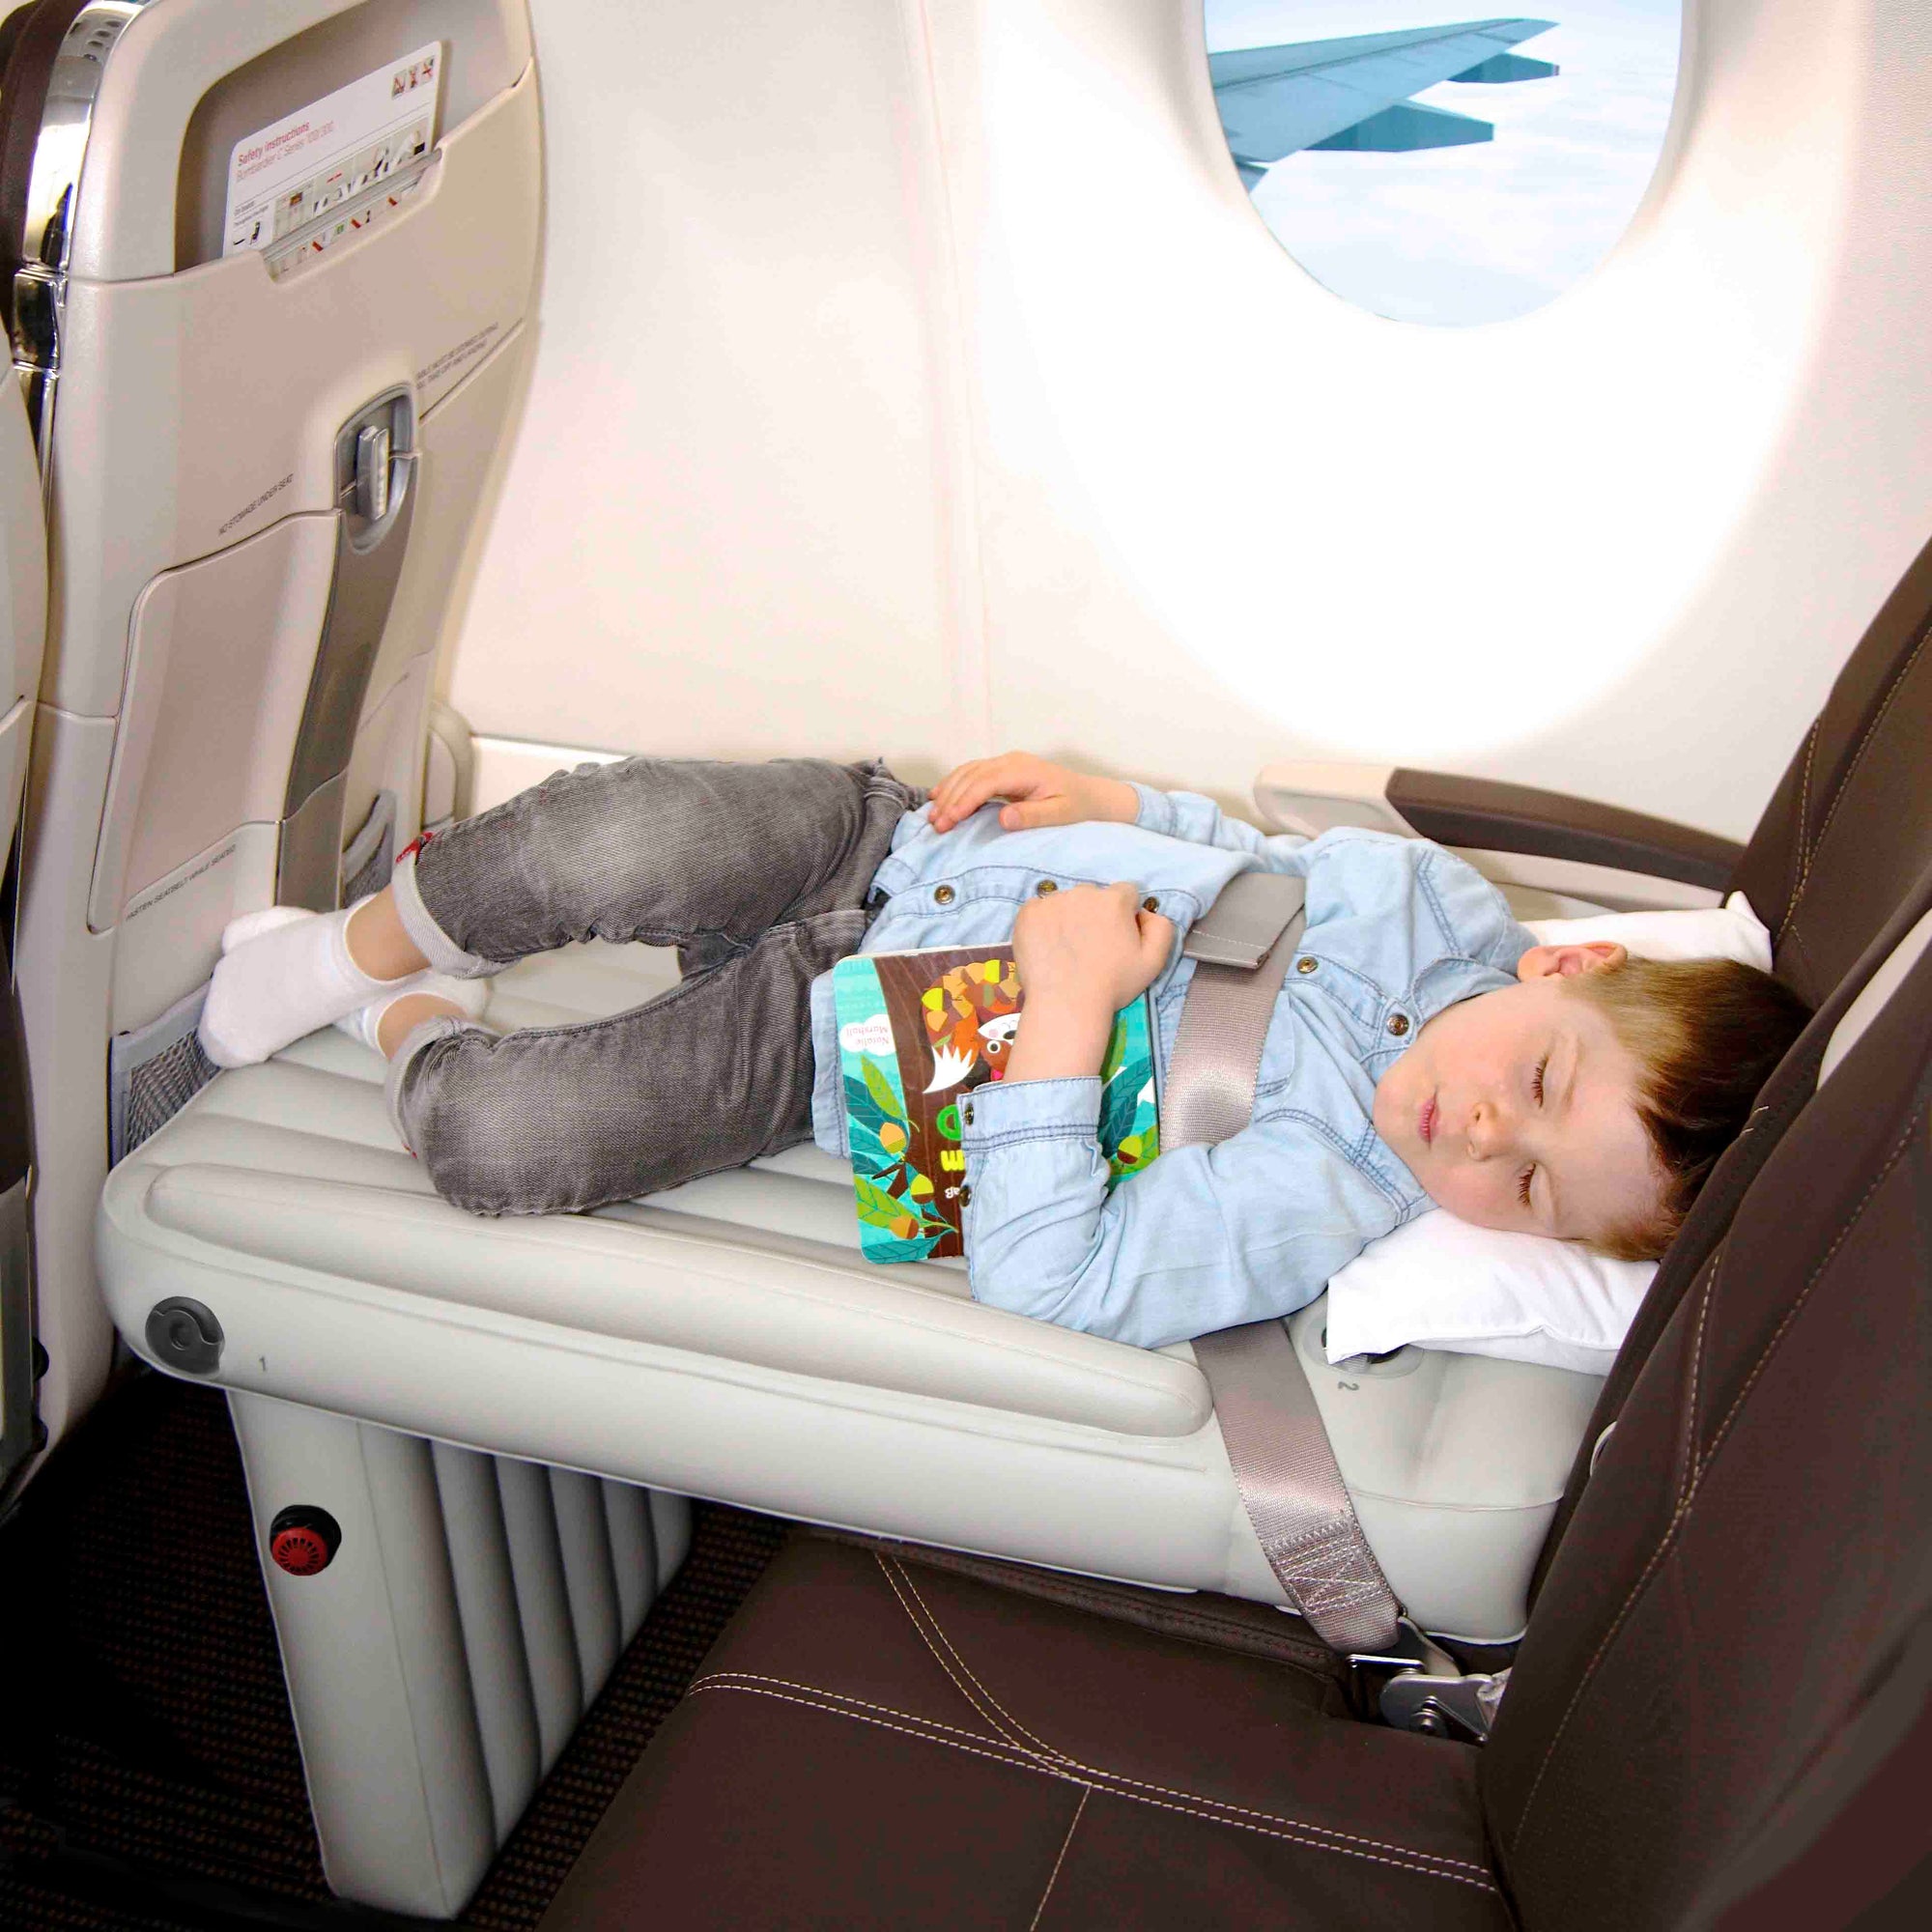 Children's Aircraft Bed, Children's Aircraft Bed, Aircraft Footrest, Children's Travel Bed, Children's Aircraft Basic Travel Supplies, Portable